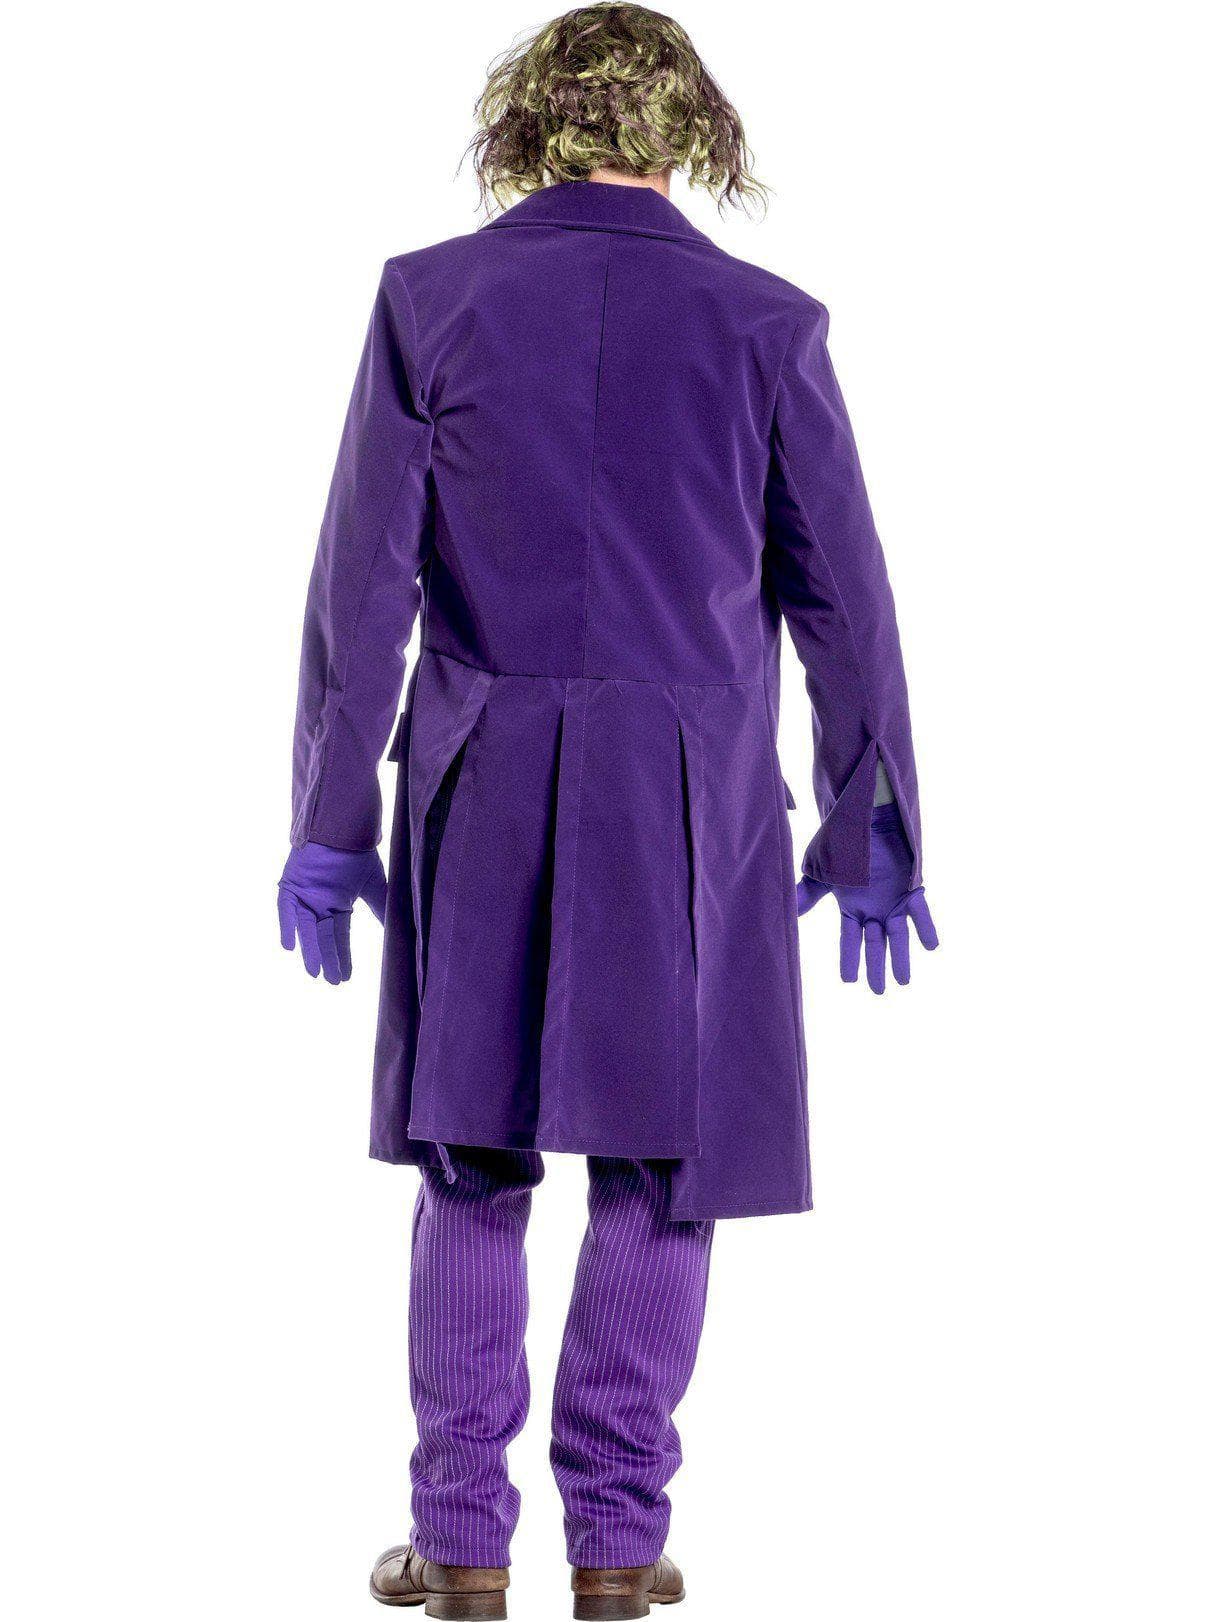 Adult Dark Knight Joker Costume - costumes.com